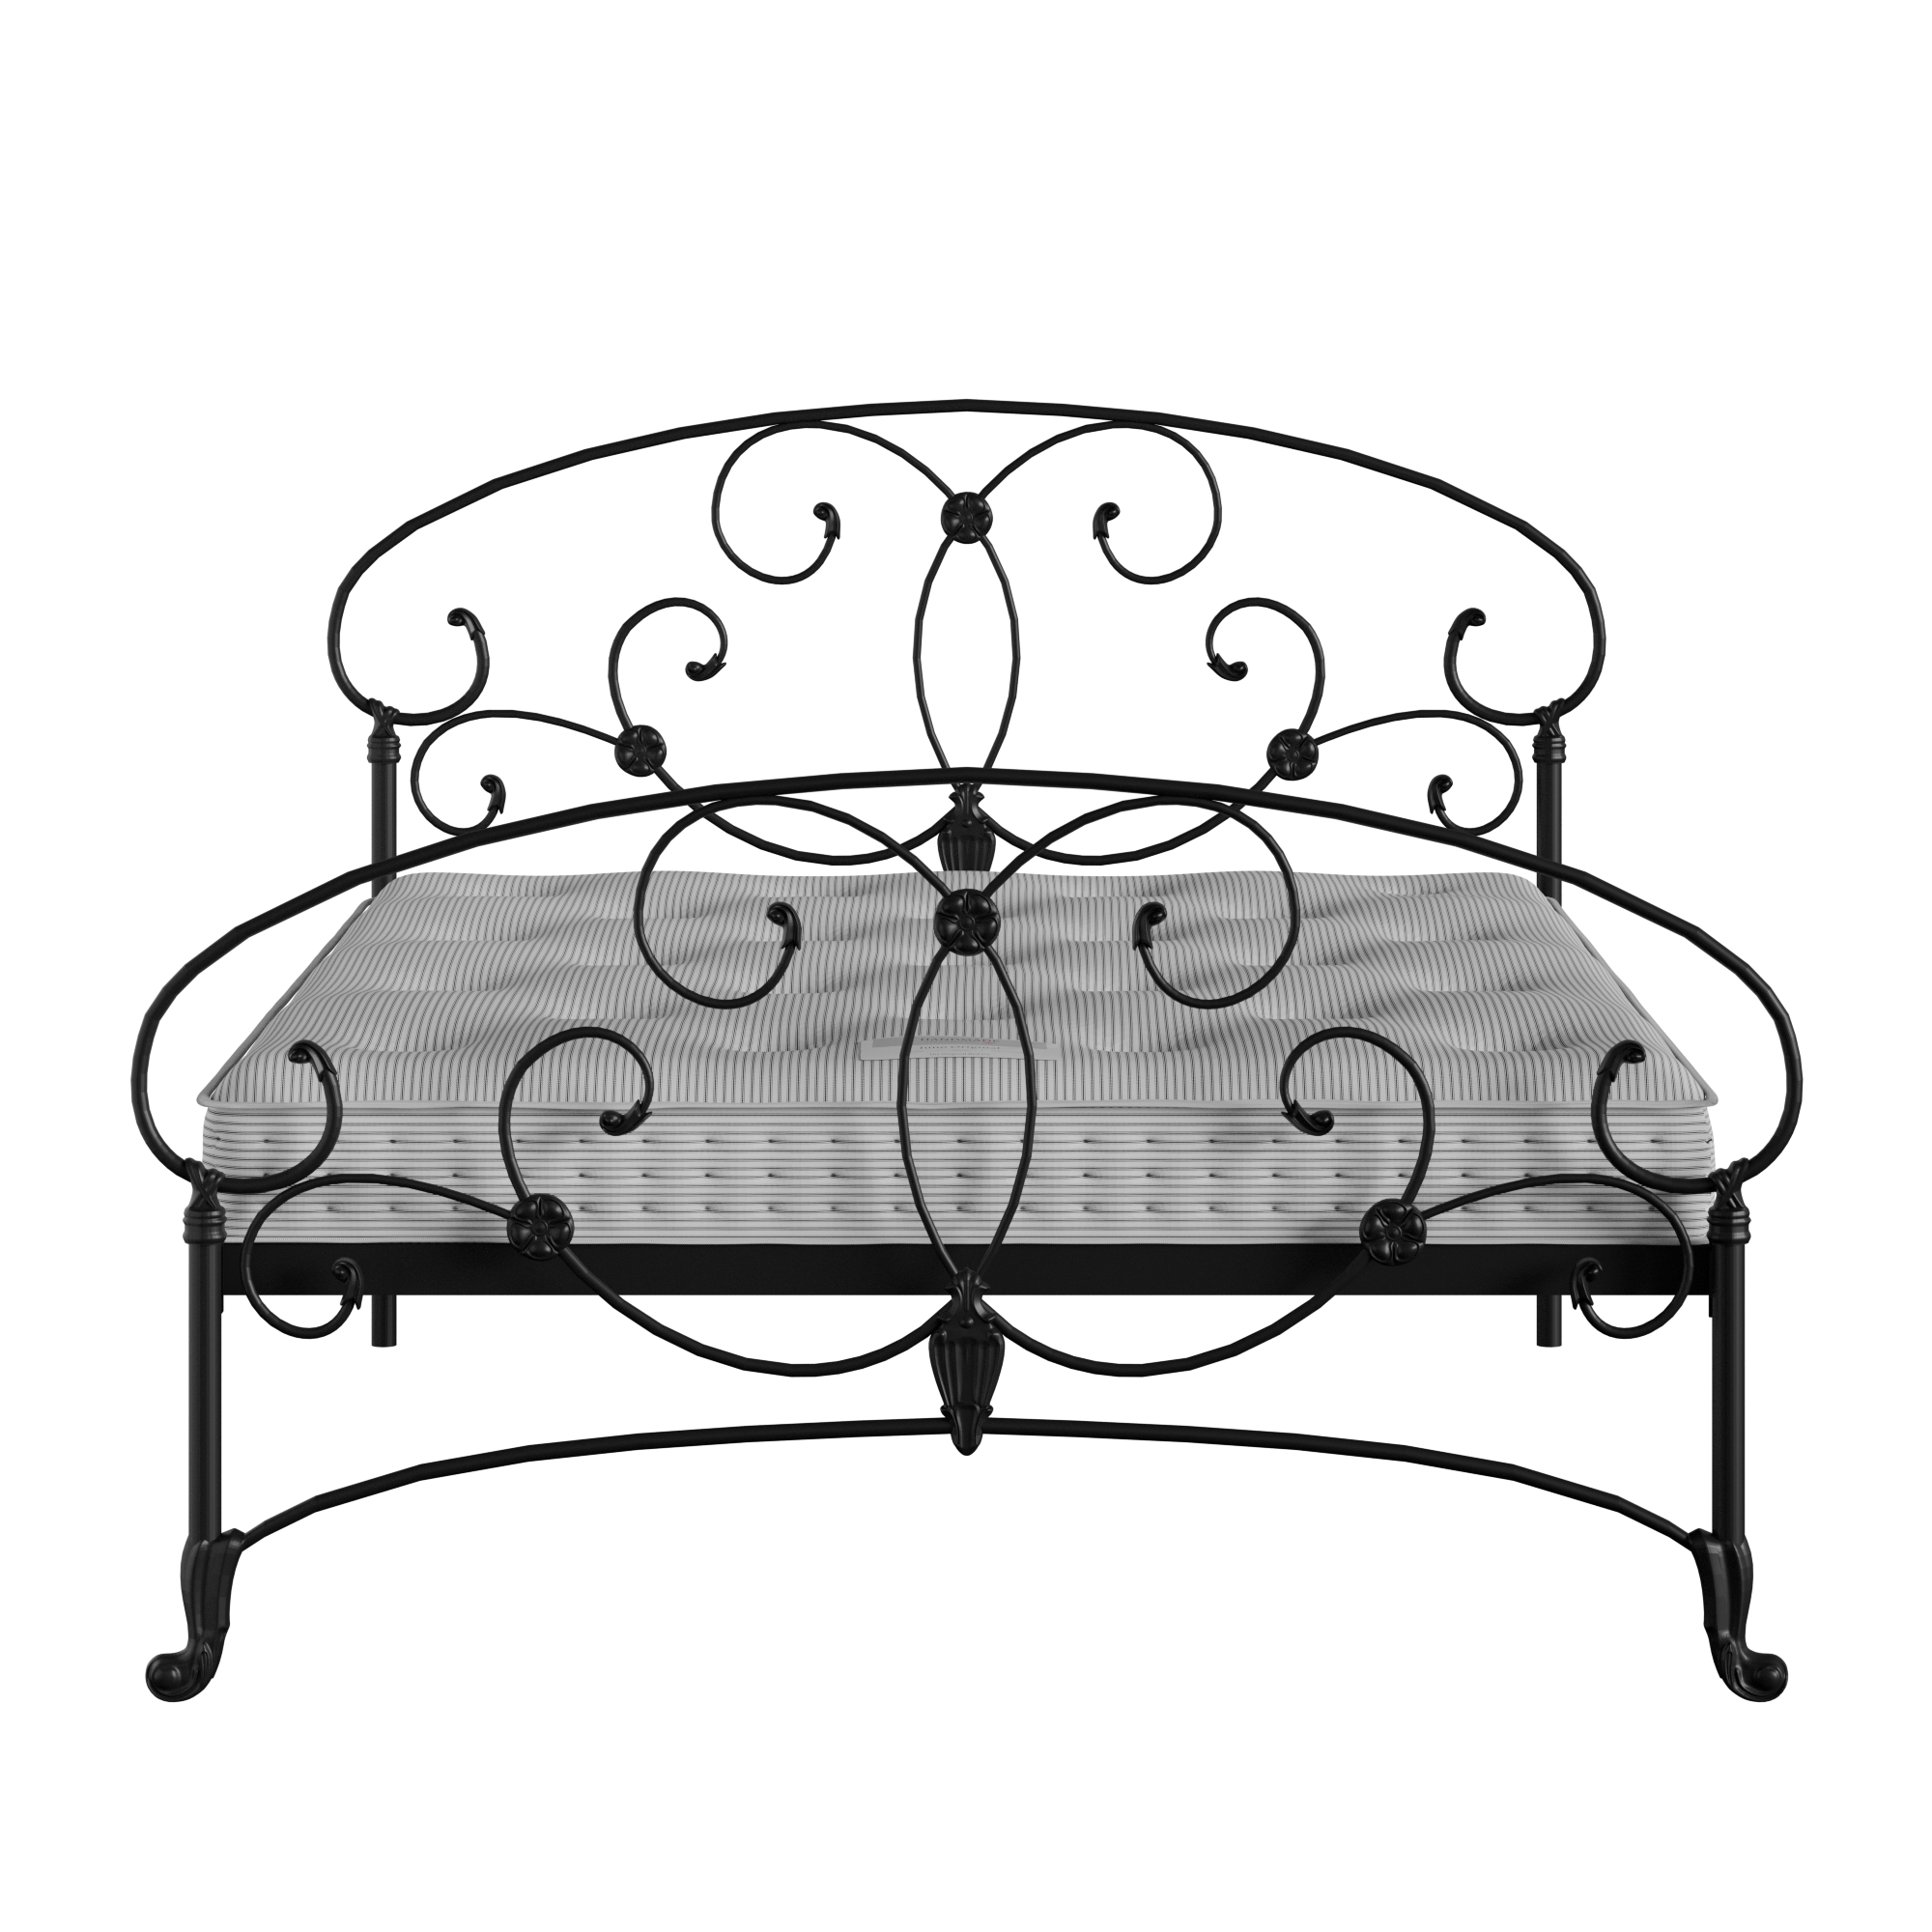 Arigna iron/metal bed in black with Juno mattress